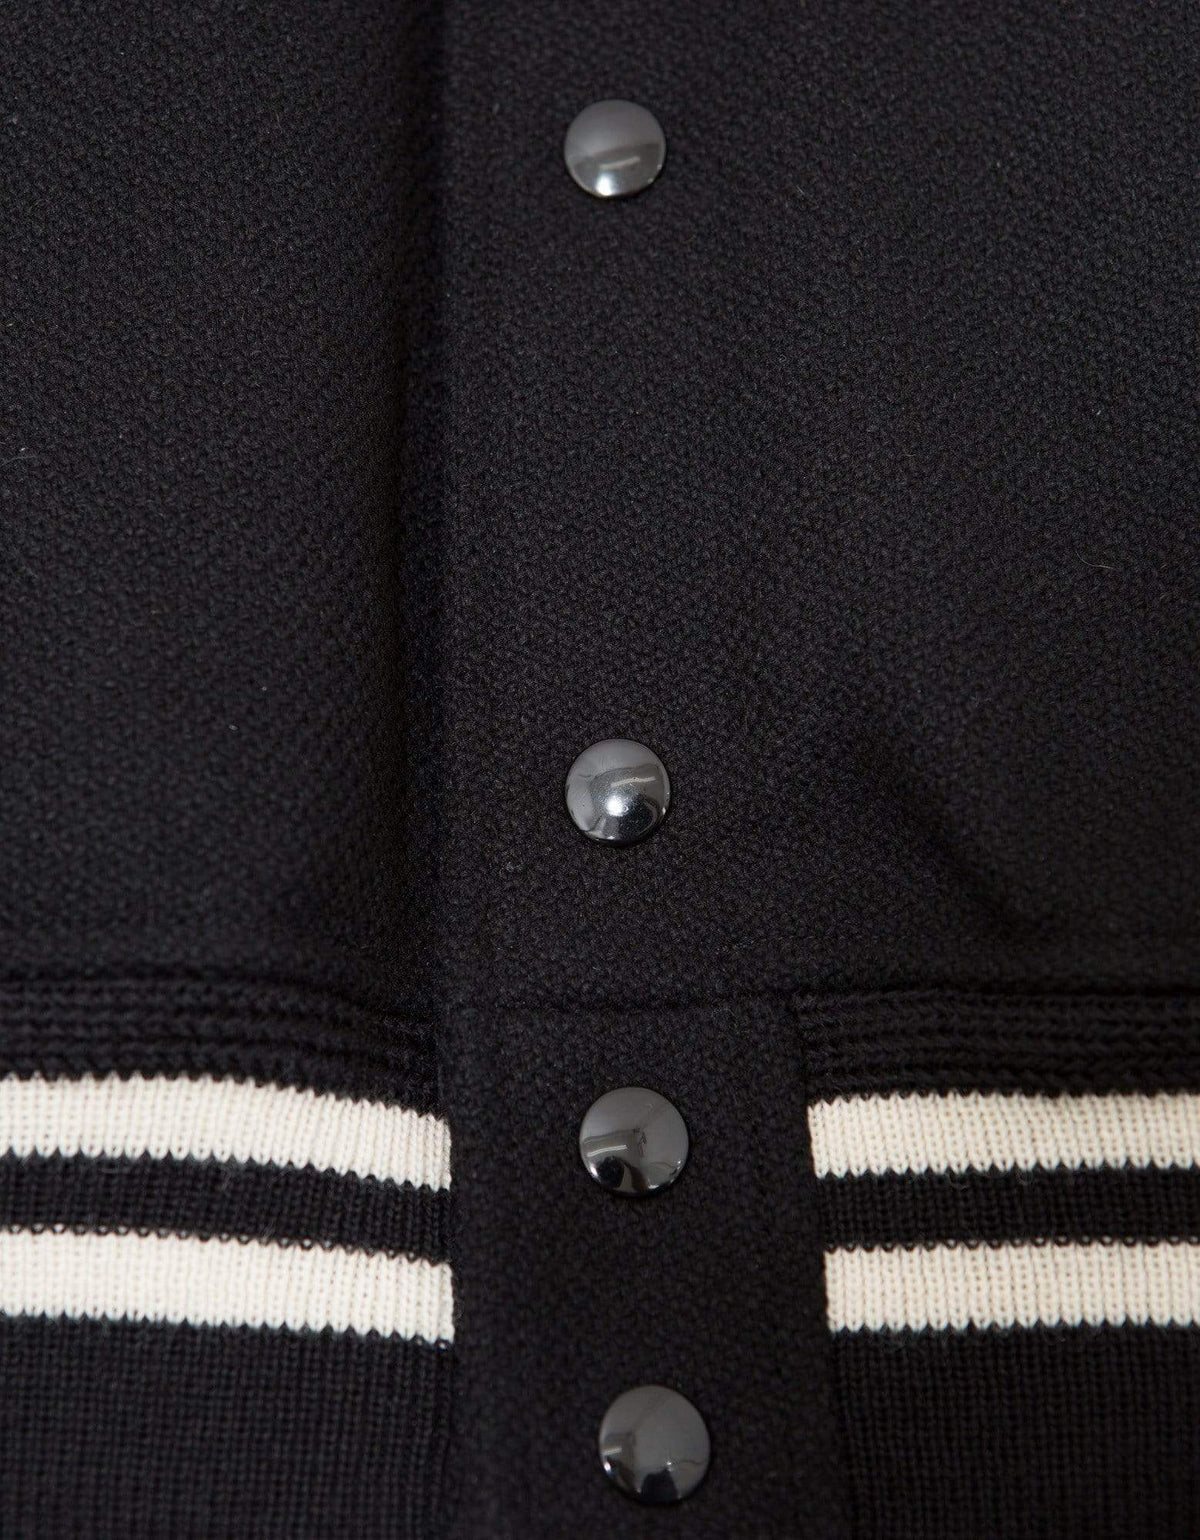 Saint Laurent Black Wool Teddy Jacket